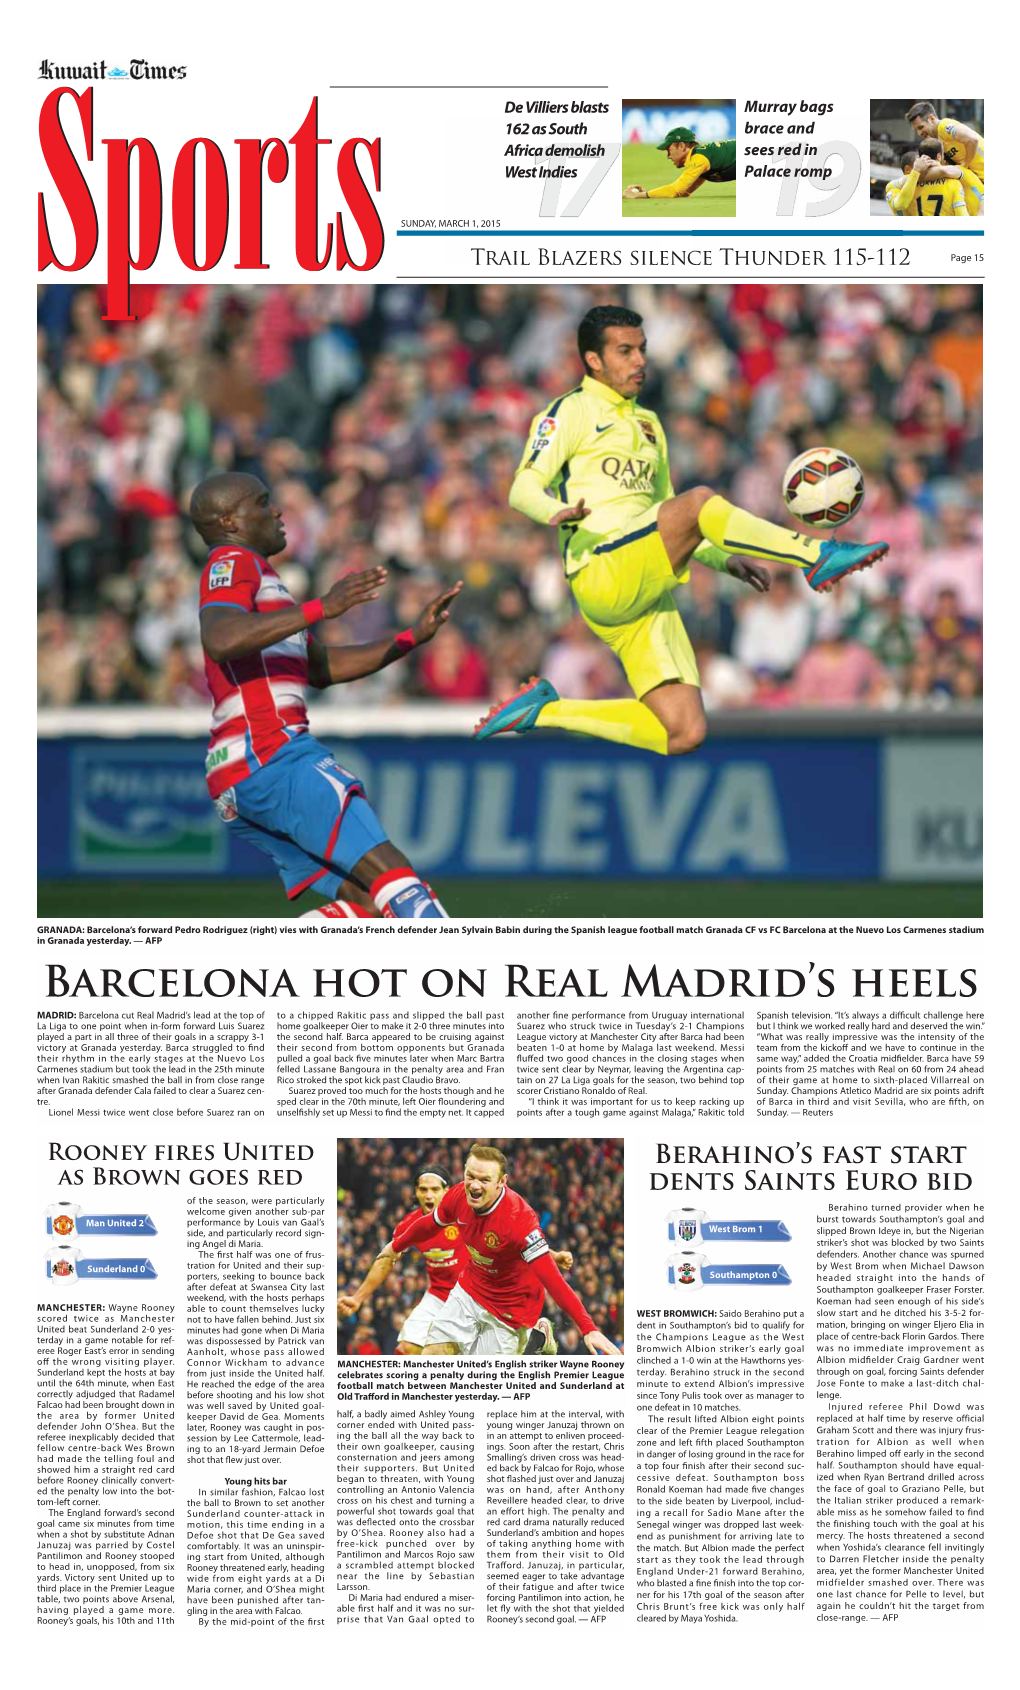 Barcelona Hot on Real Madrid's Heels